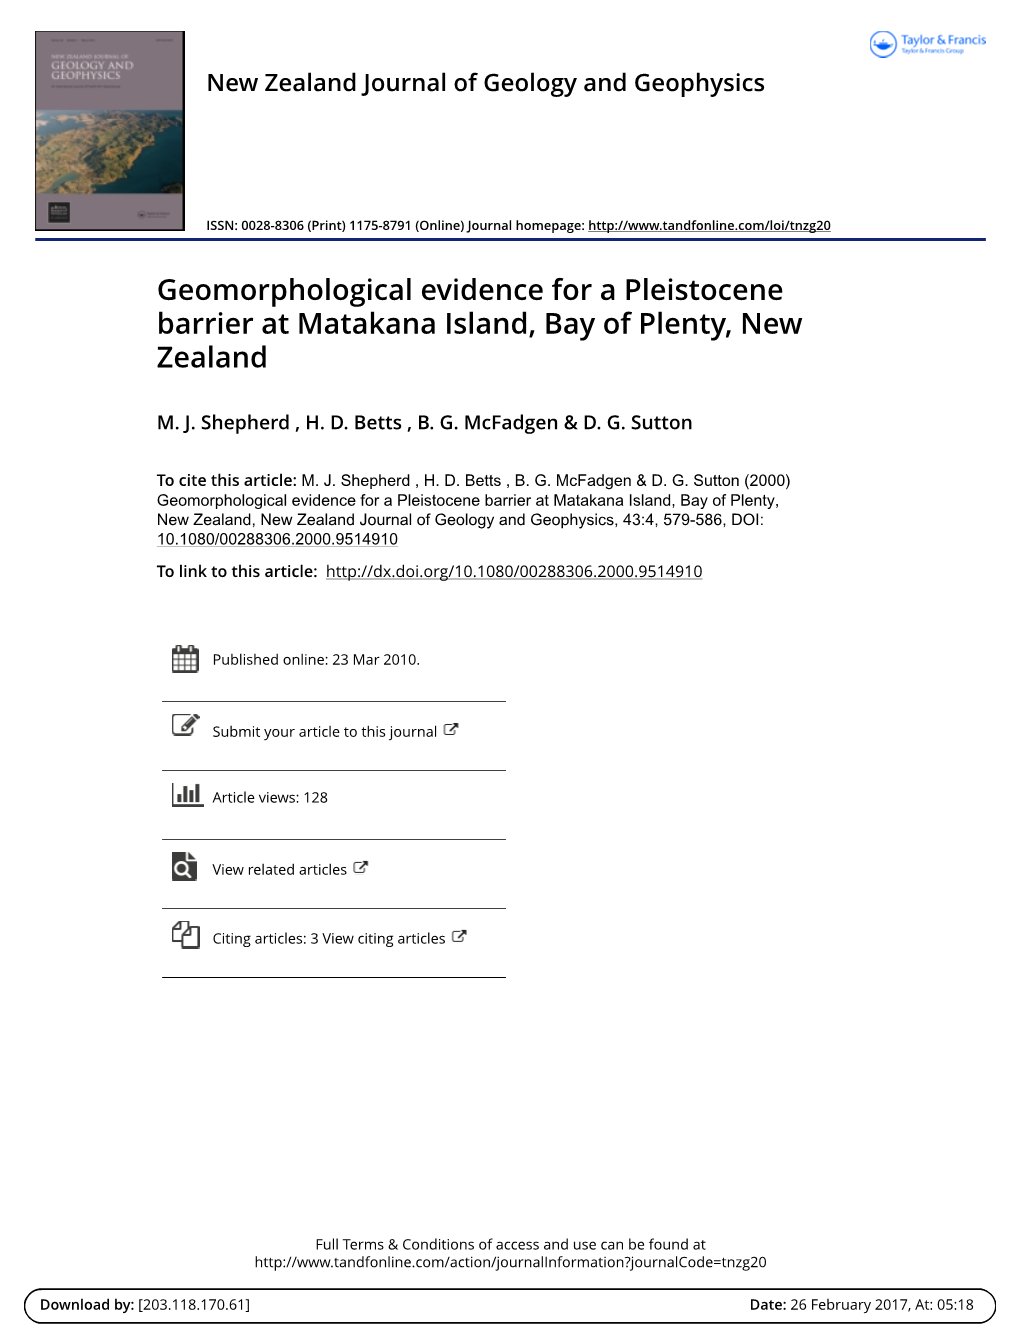 Geomorphological Evidence for a Pleistocene Barrier at Matakana Island, Bay of Plenty, New Zealand